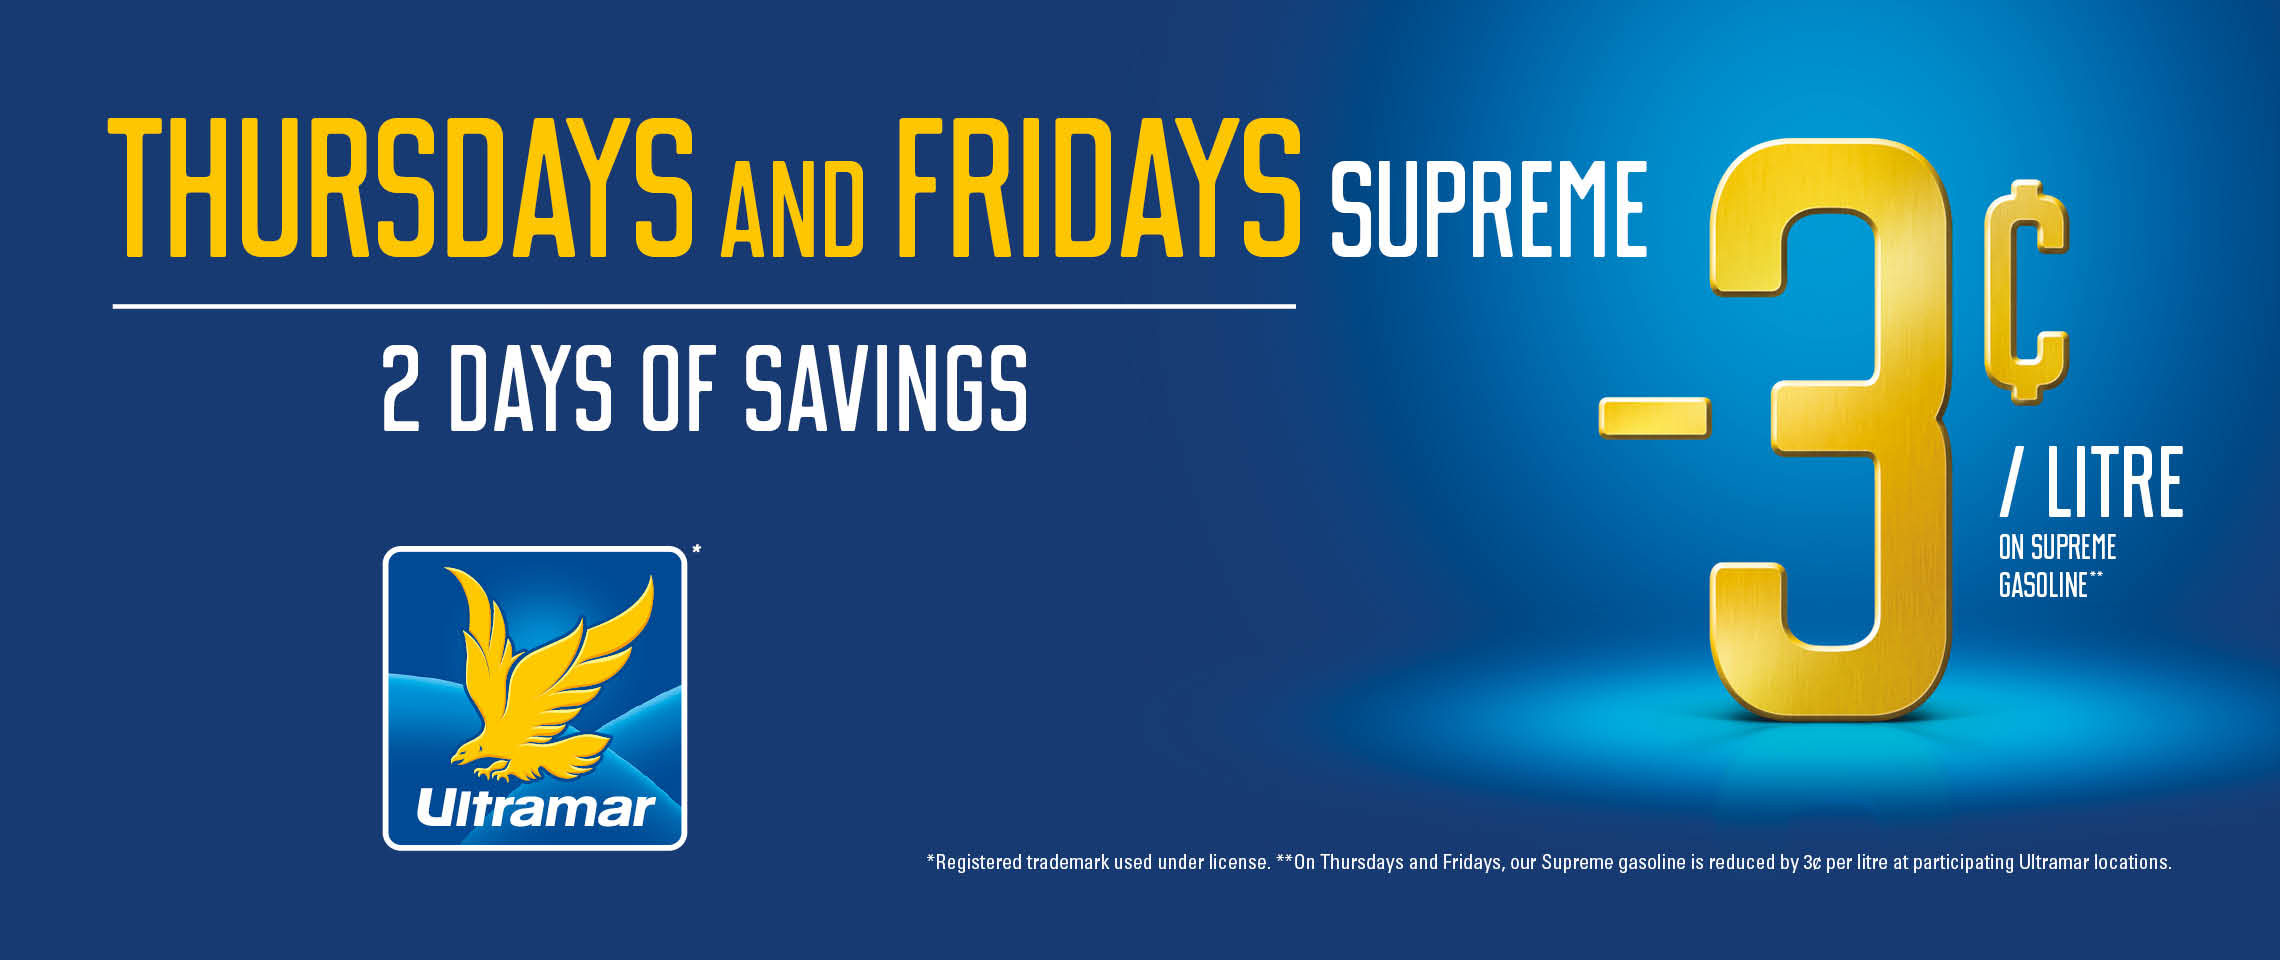 Ultramar - Thursdays and Fridays supreme -3¢ / litre. 2 Days of savings